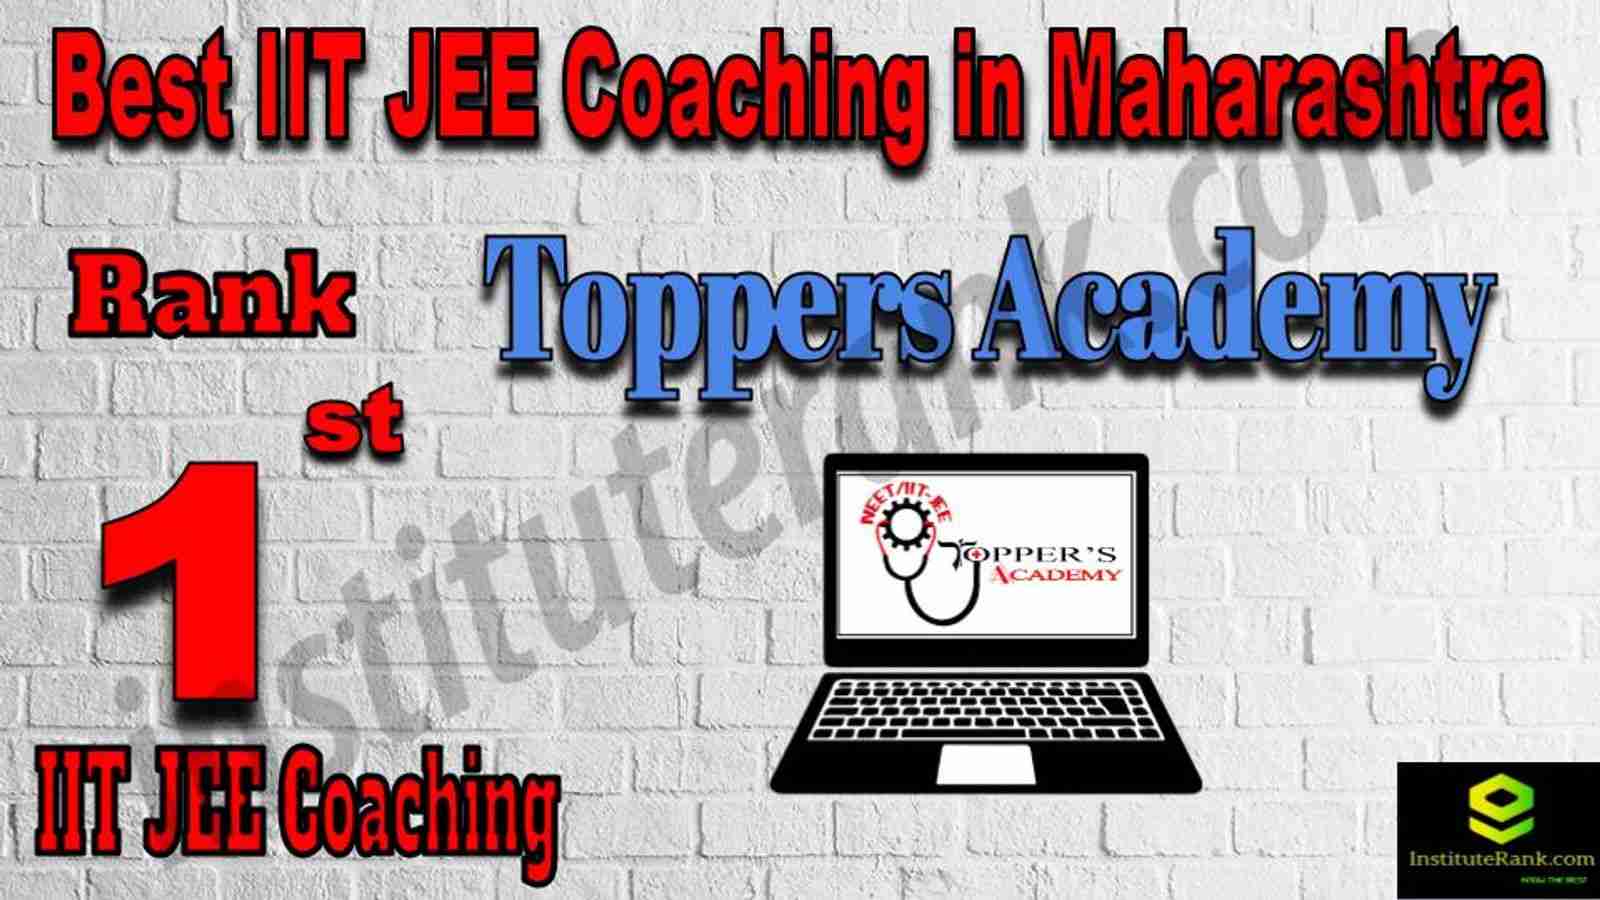 1st Best IIT JEE Coaching in Maharashtra